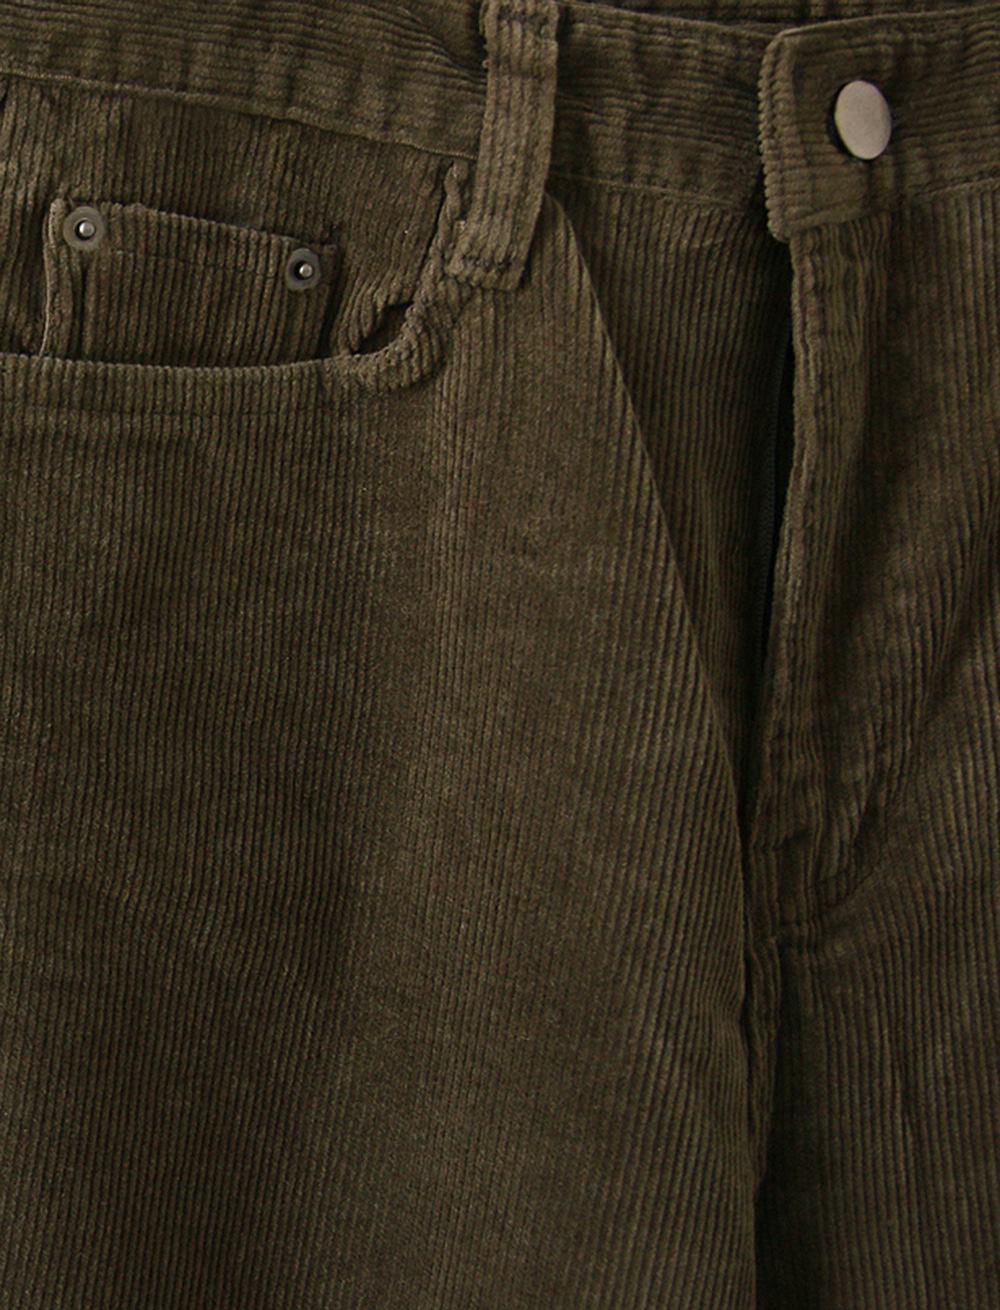 pin corduroy pants (3c)  컬러감이 예쁜 코듀로이 팬츠 !